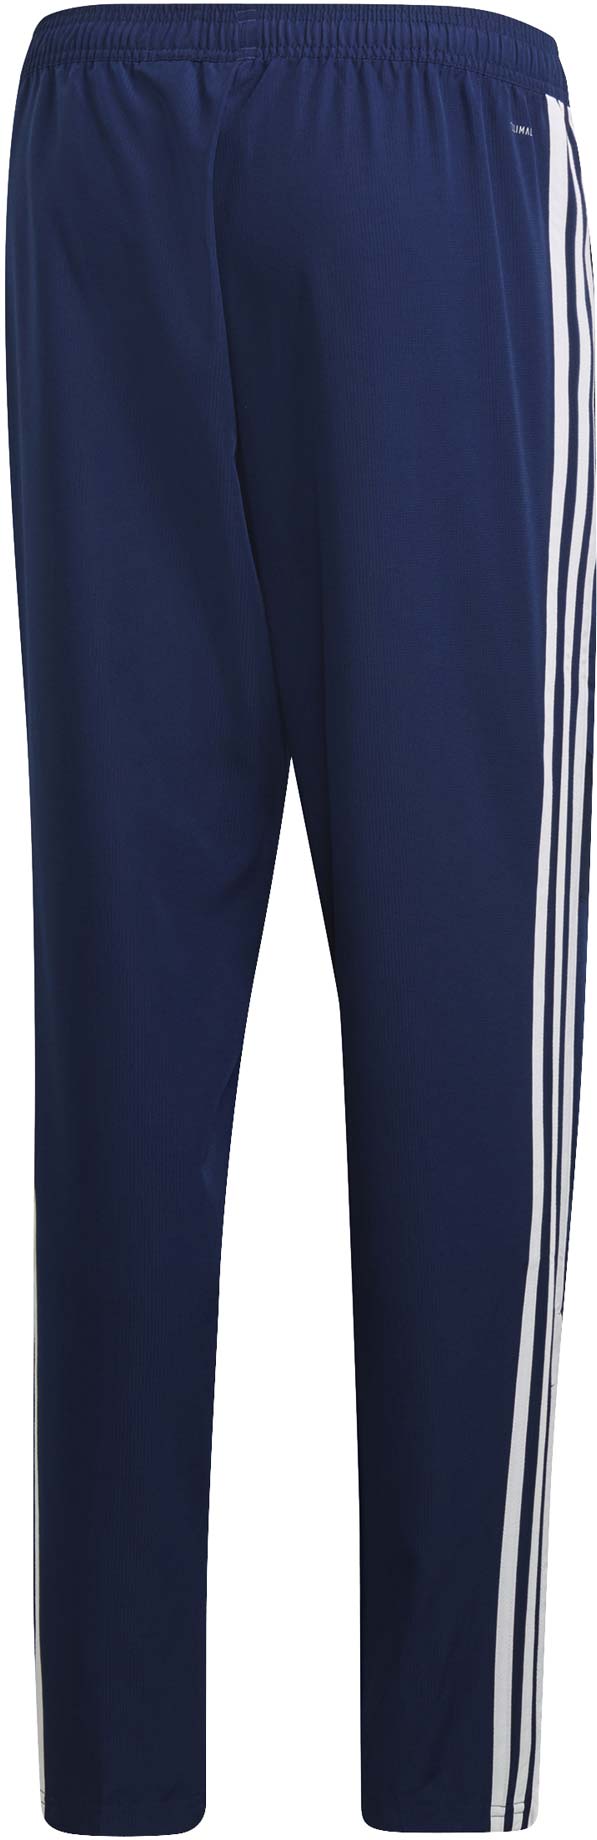 Men’s sports trousers